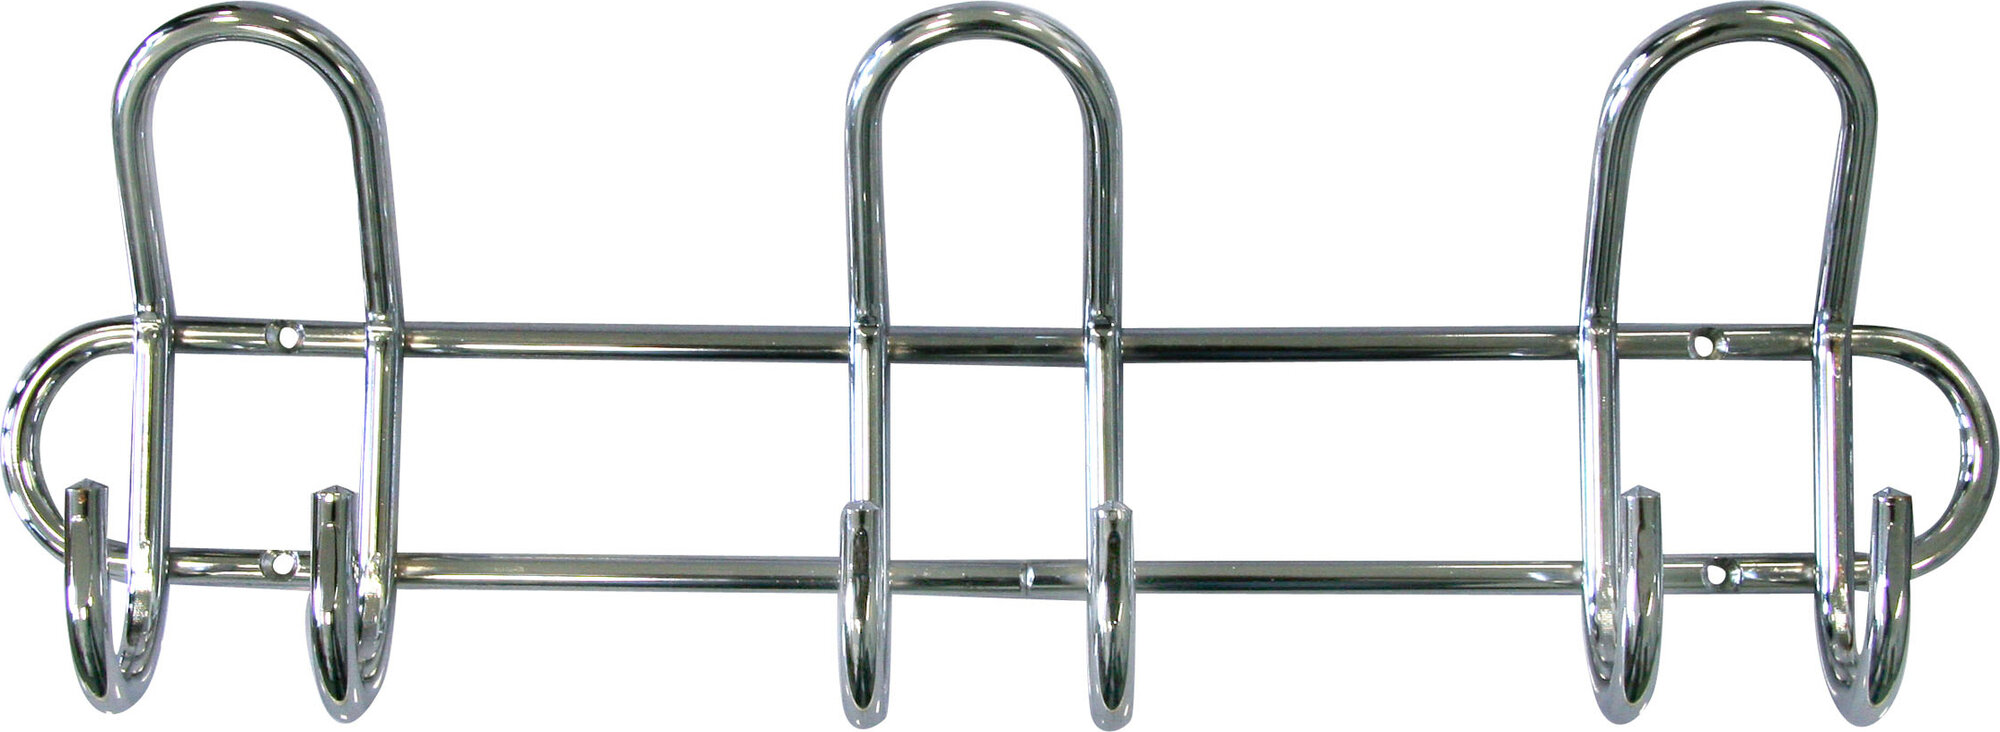 Вешалка AXENTIA с 9-ю крючками, хромированная сталь, 40 х 13 х 6 см, вес до 10 кг